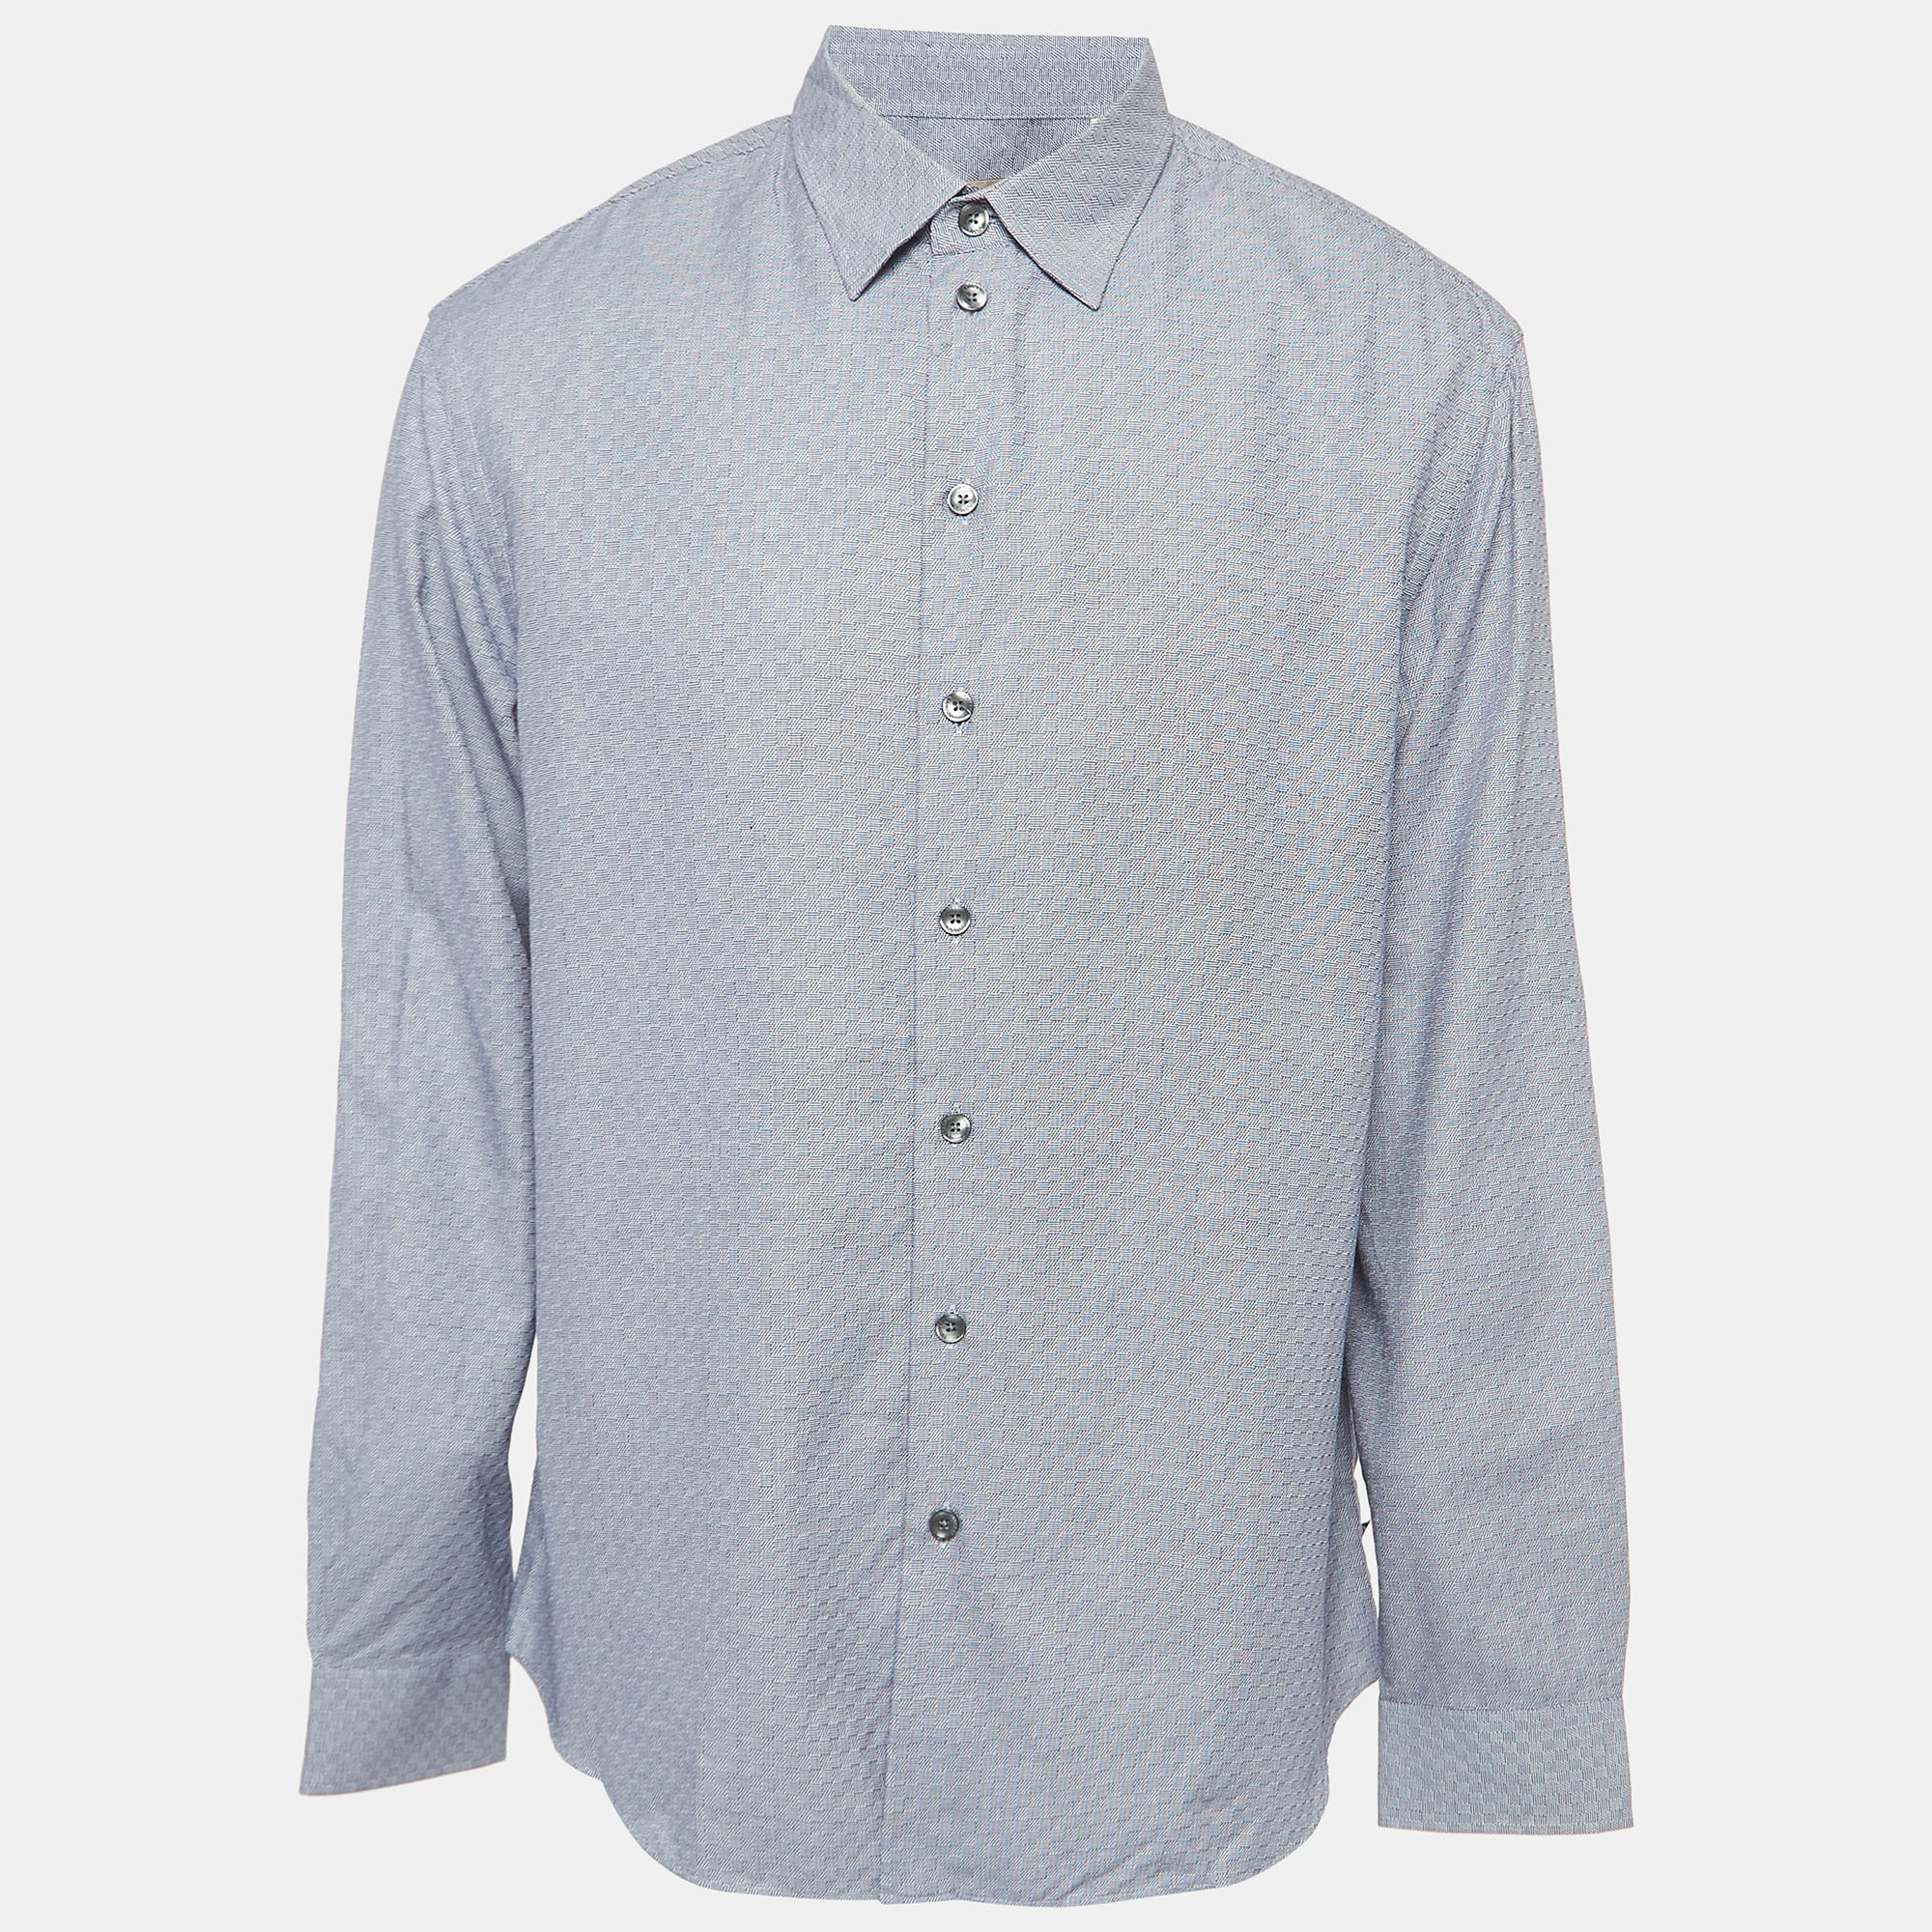 Armani collezioni blue micro checks cotton long sleeve shirt xl